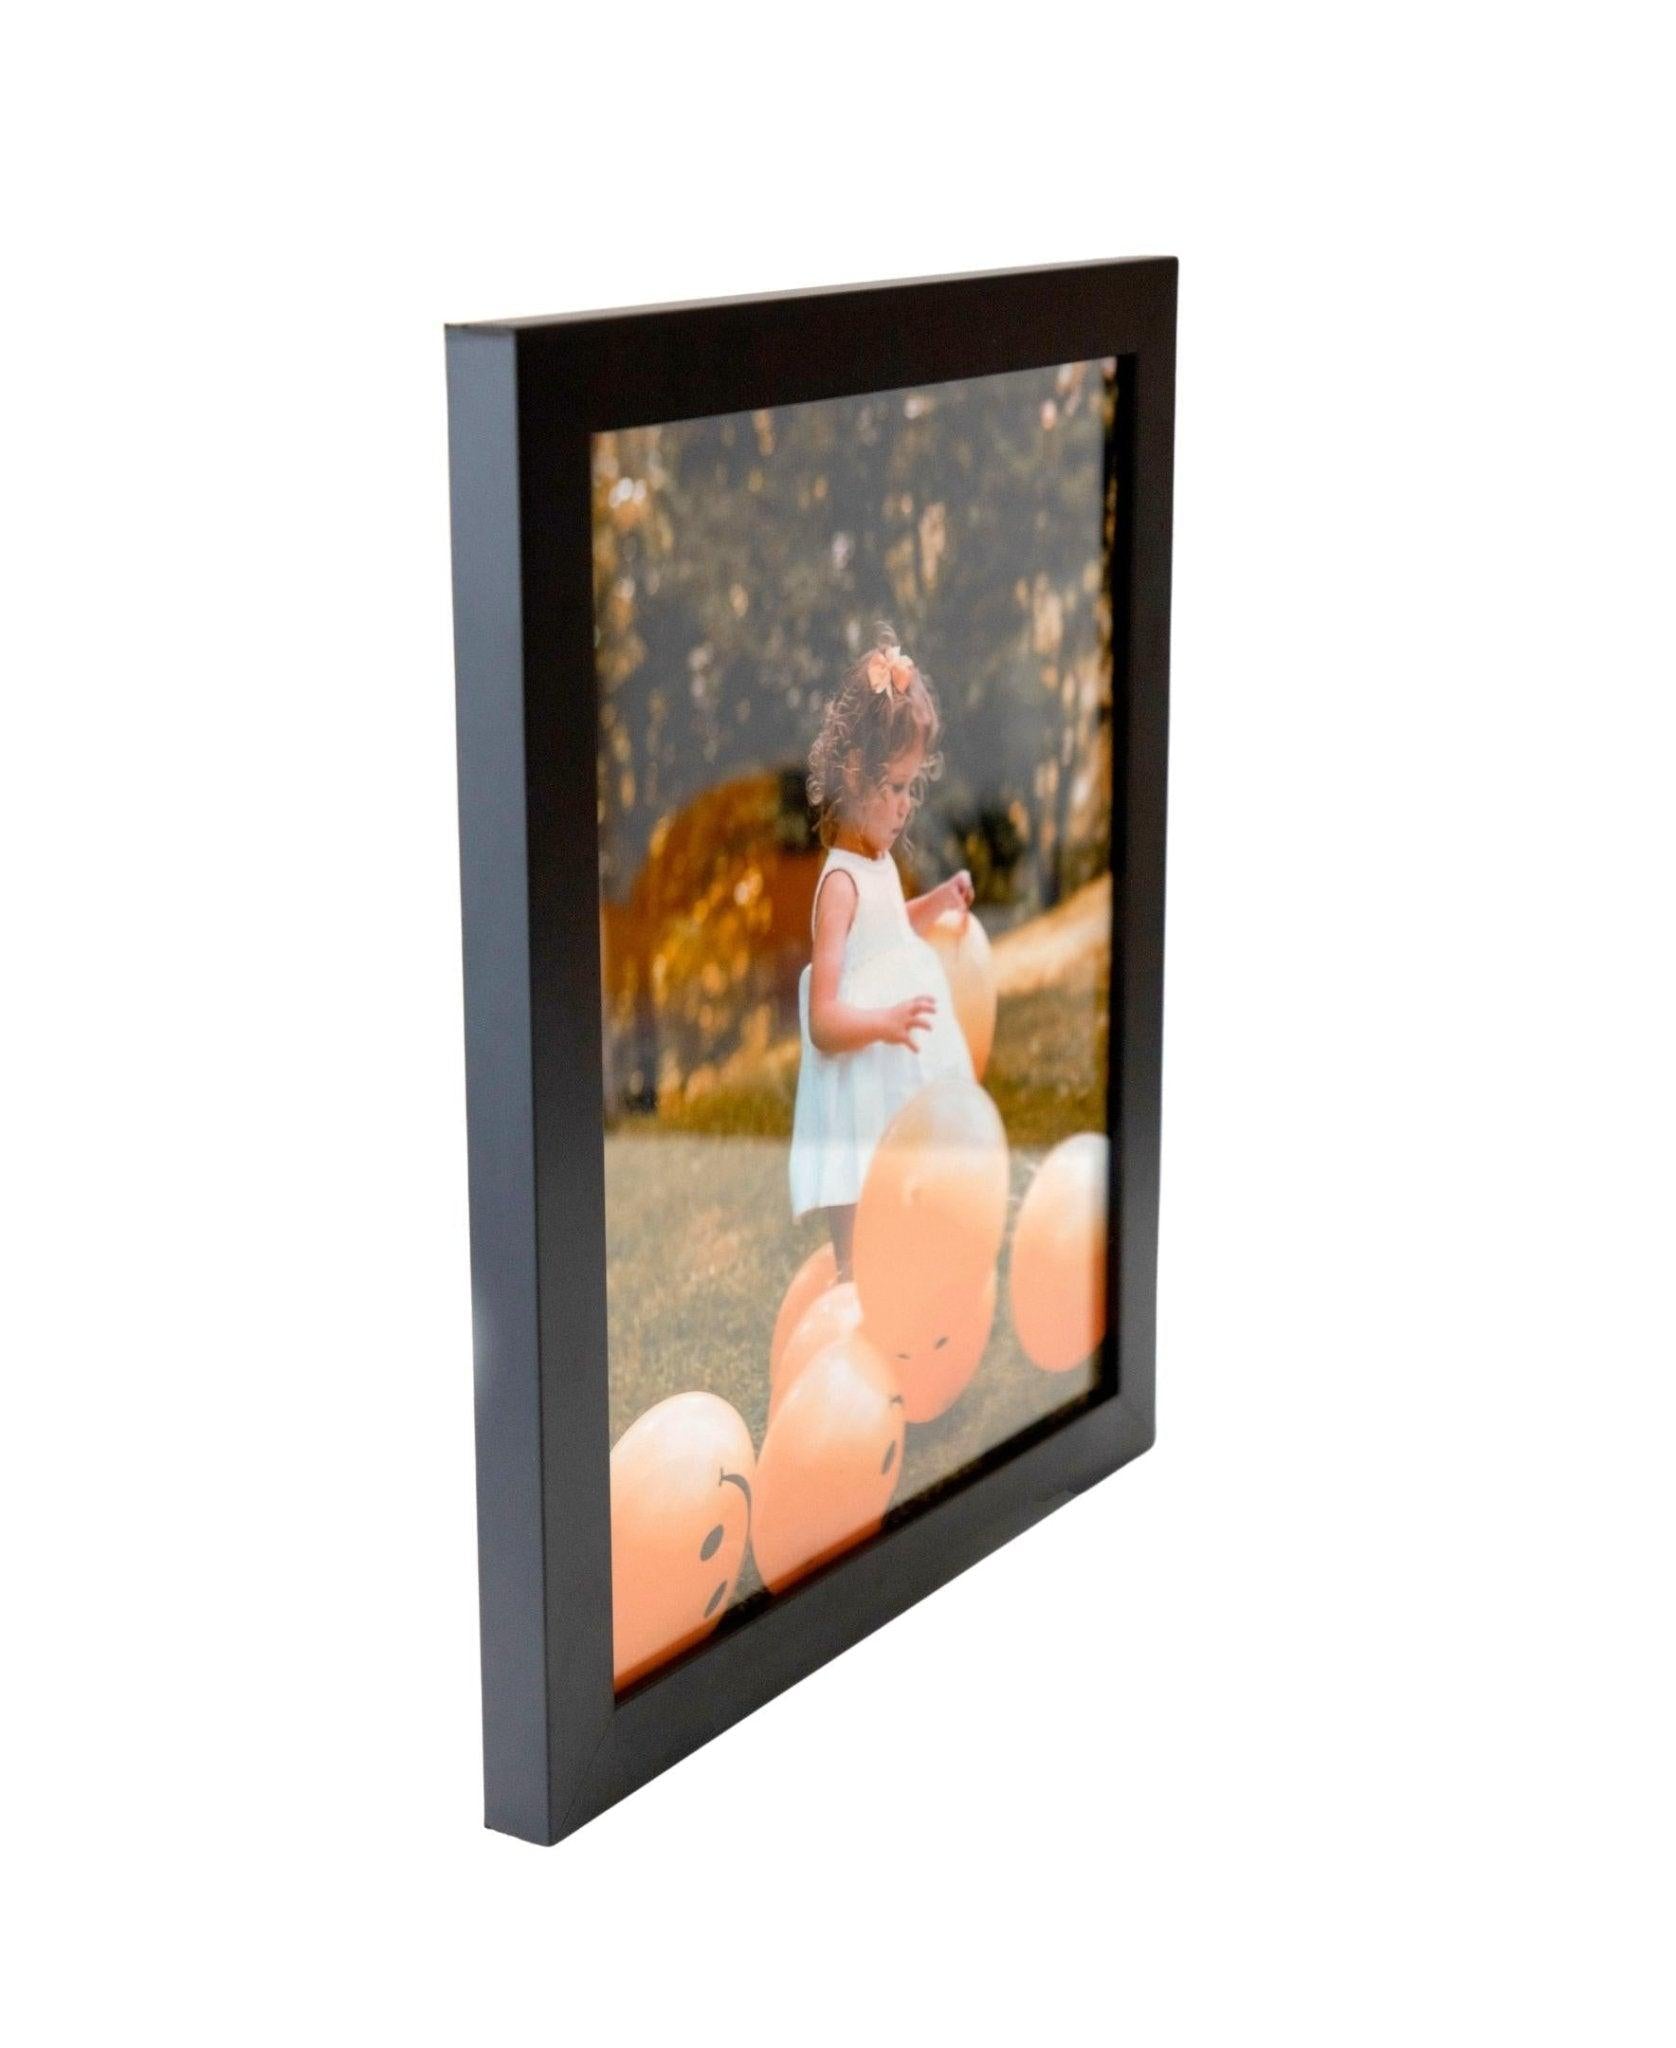 What is a picture frame? NJ Frame shop Explains - Modern Memory Design Picture frames - NJ Frame shop Custom framing